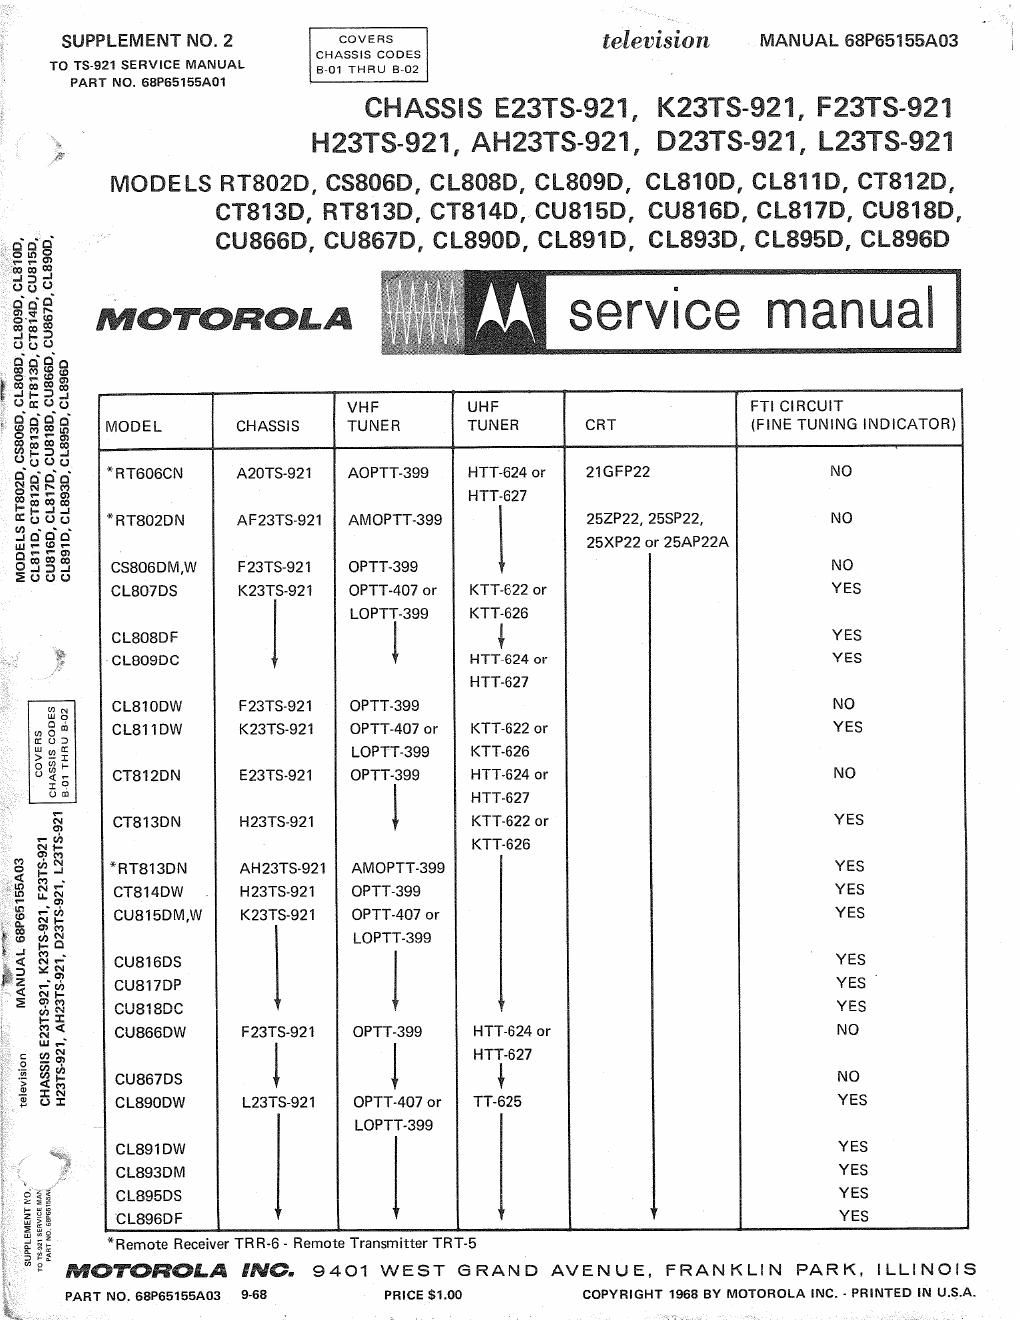 motorola cl 896 d service manual